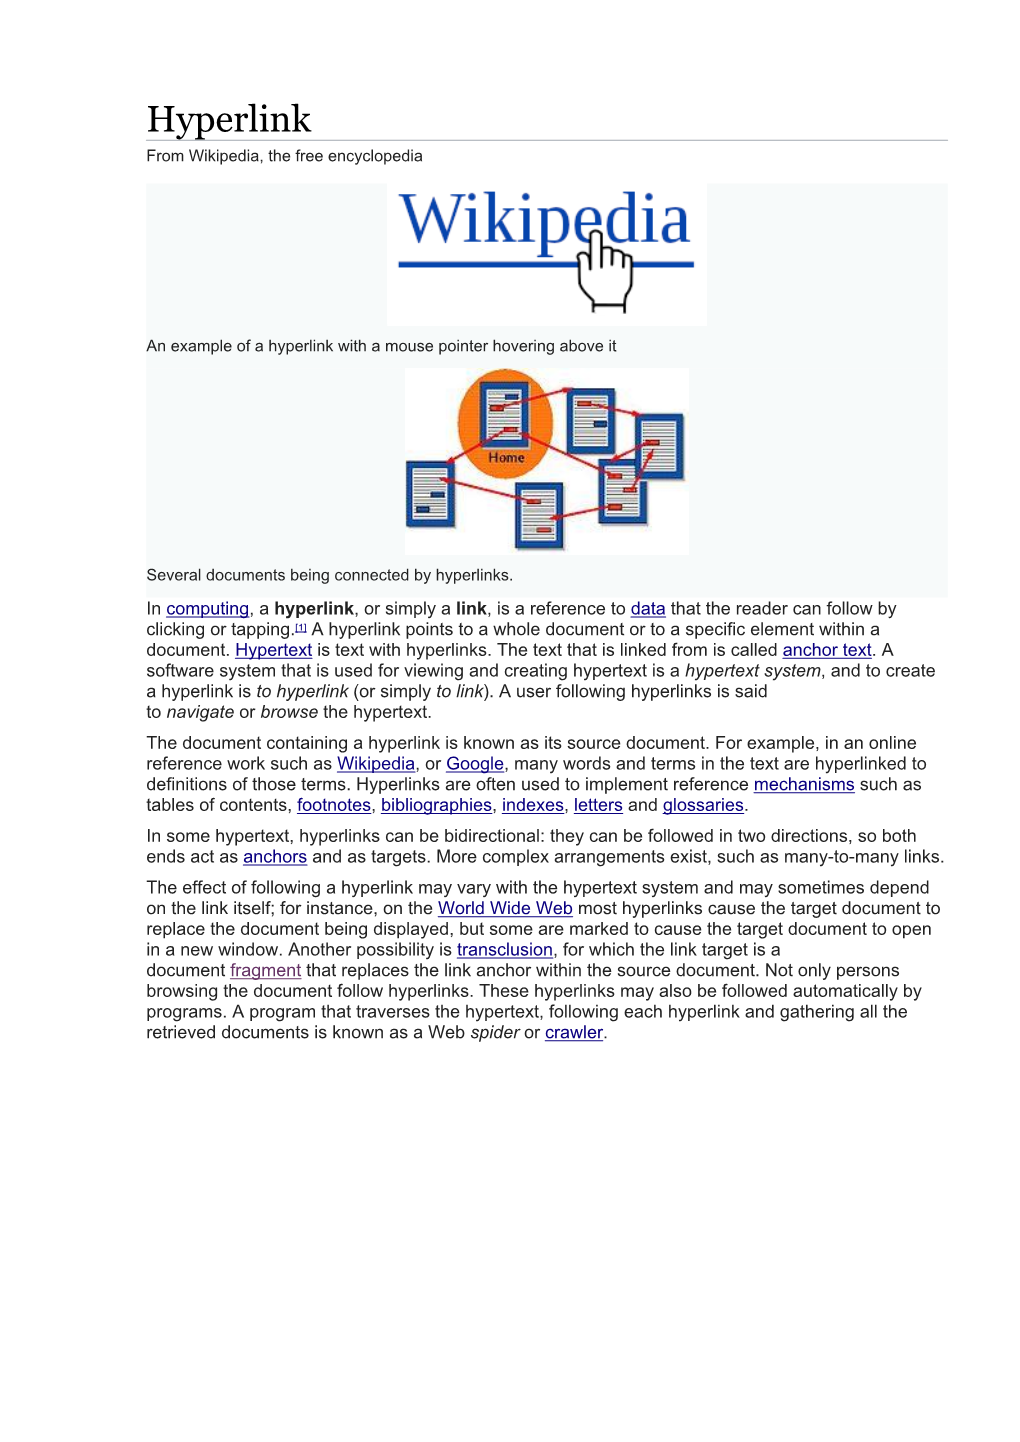 Hyperlink from Wikipedia, the Free Encyclopedia